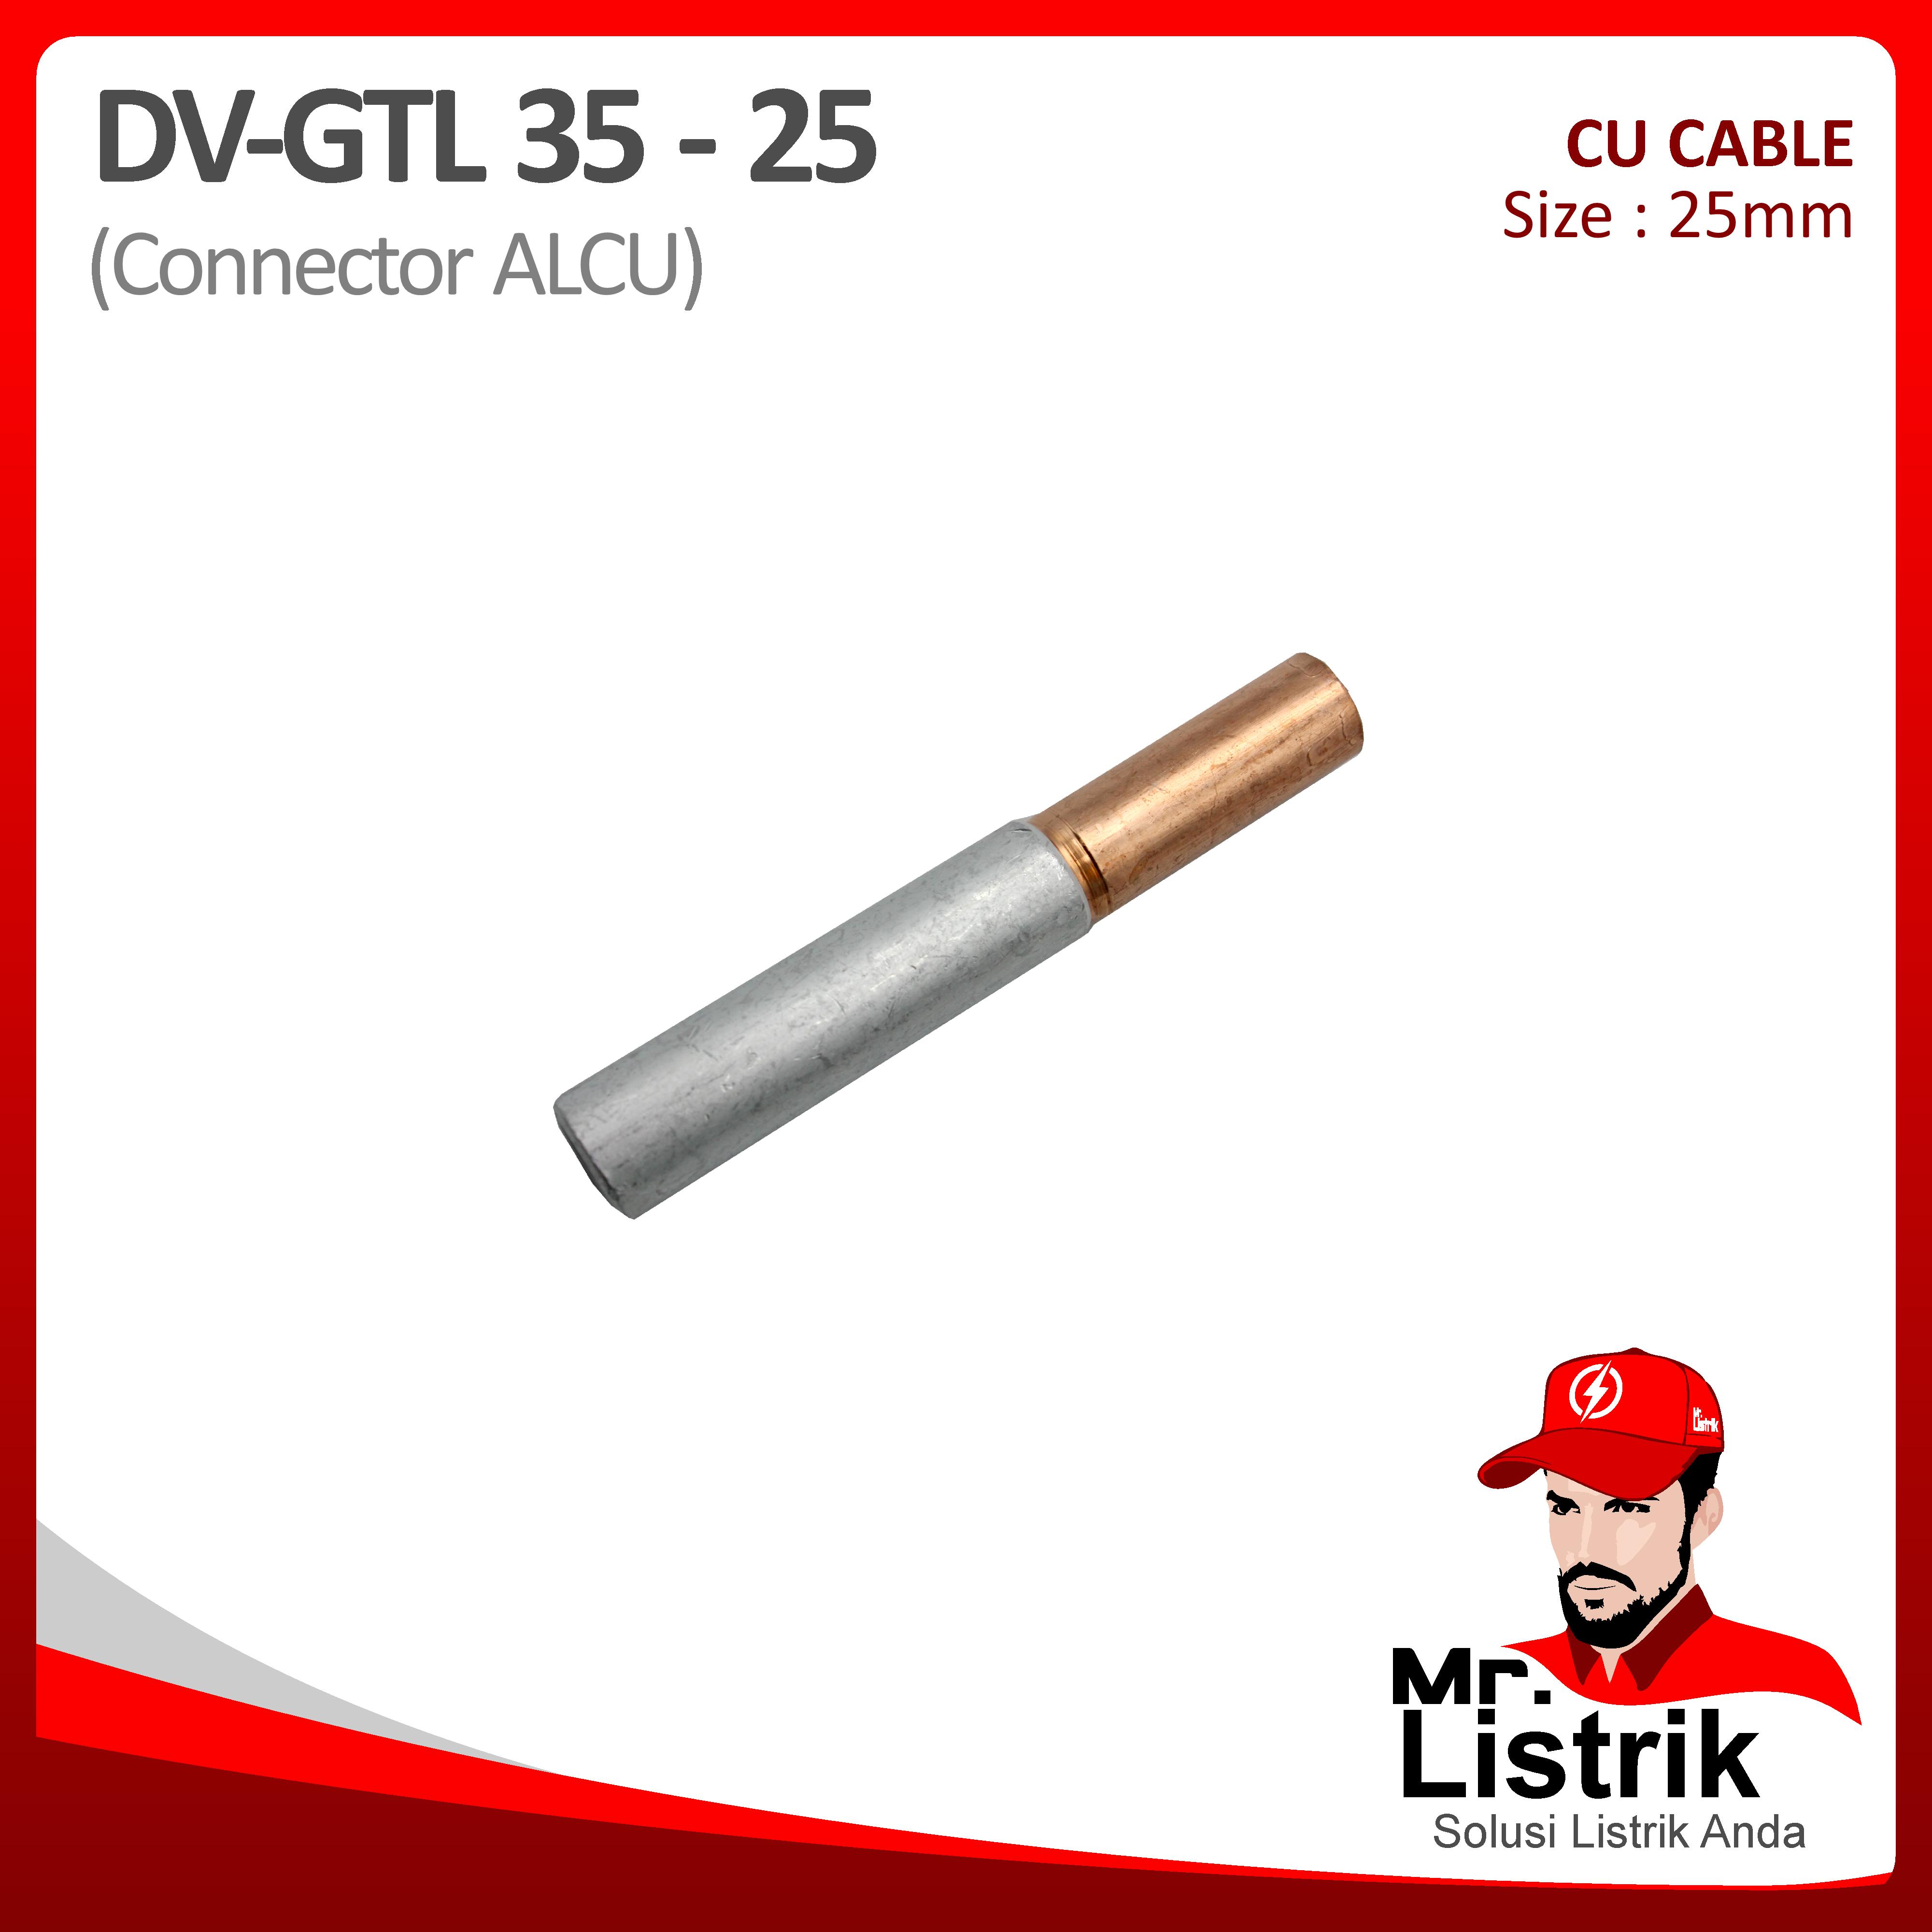 Connector ALCU 35mm DV GTL-35-25